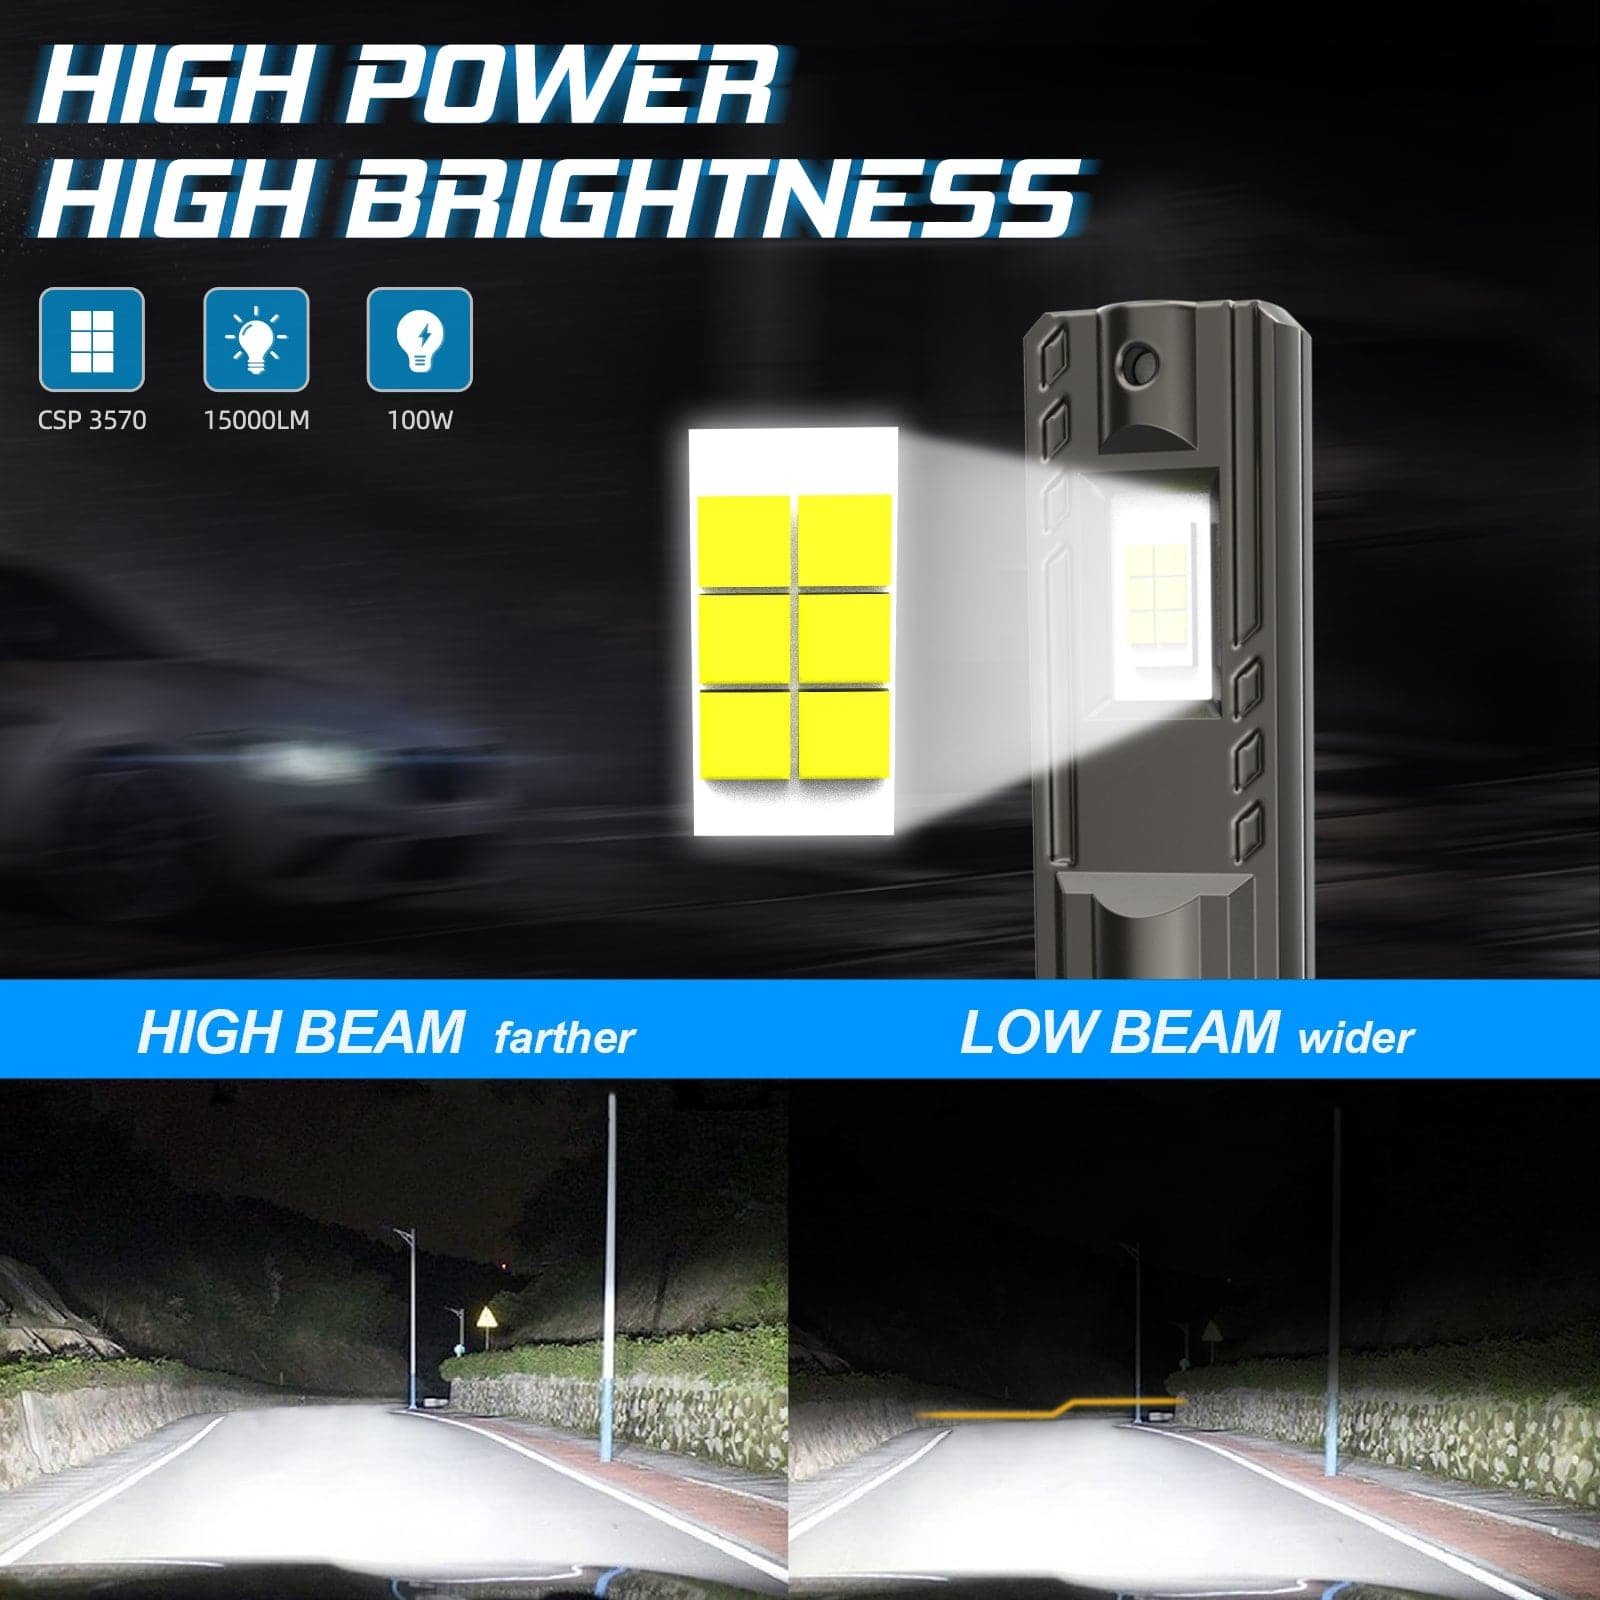 BEVINSEE S550 H11 LED Headlight Bulbs 100W 10,000LM 6000-6500K White Super Bright